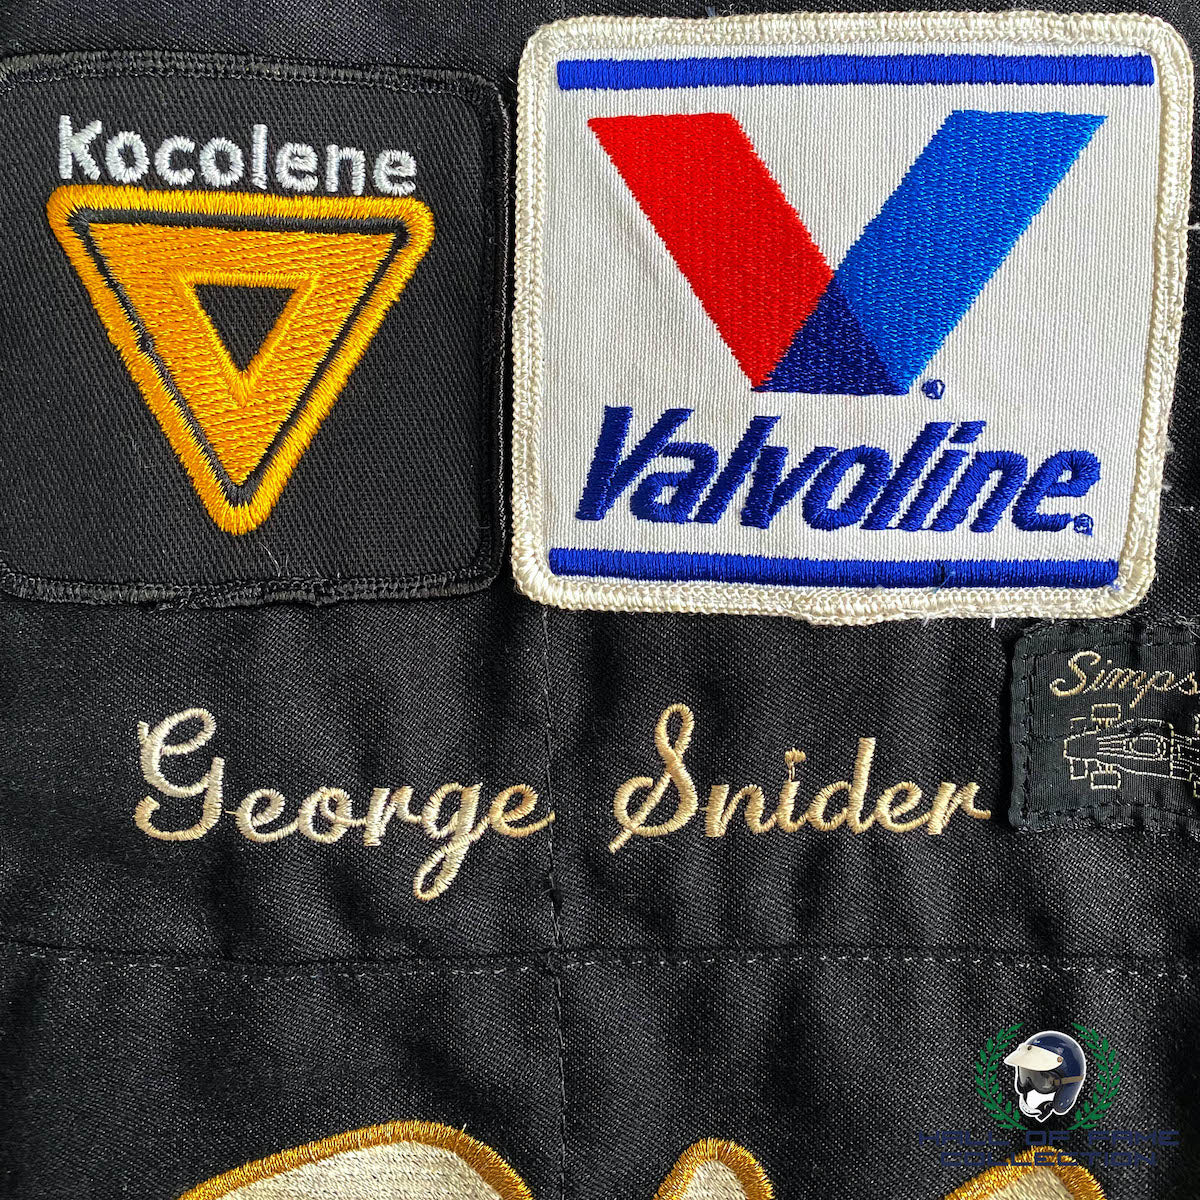 1988 George Snider Race Used Skoal Sprint Car Suit